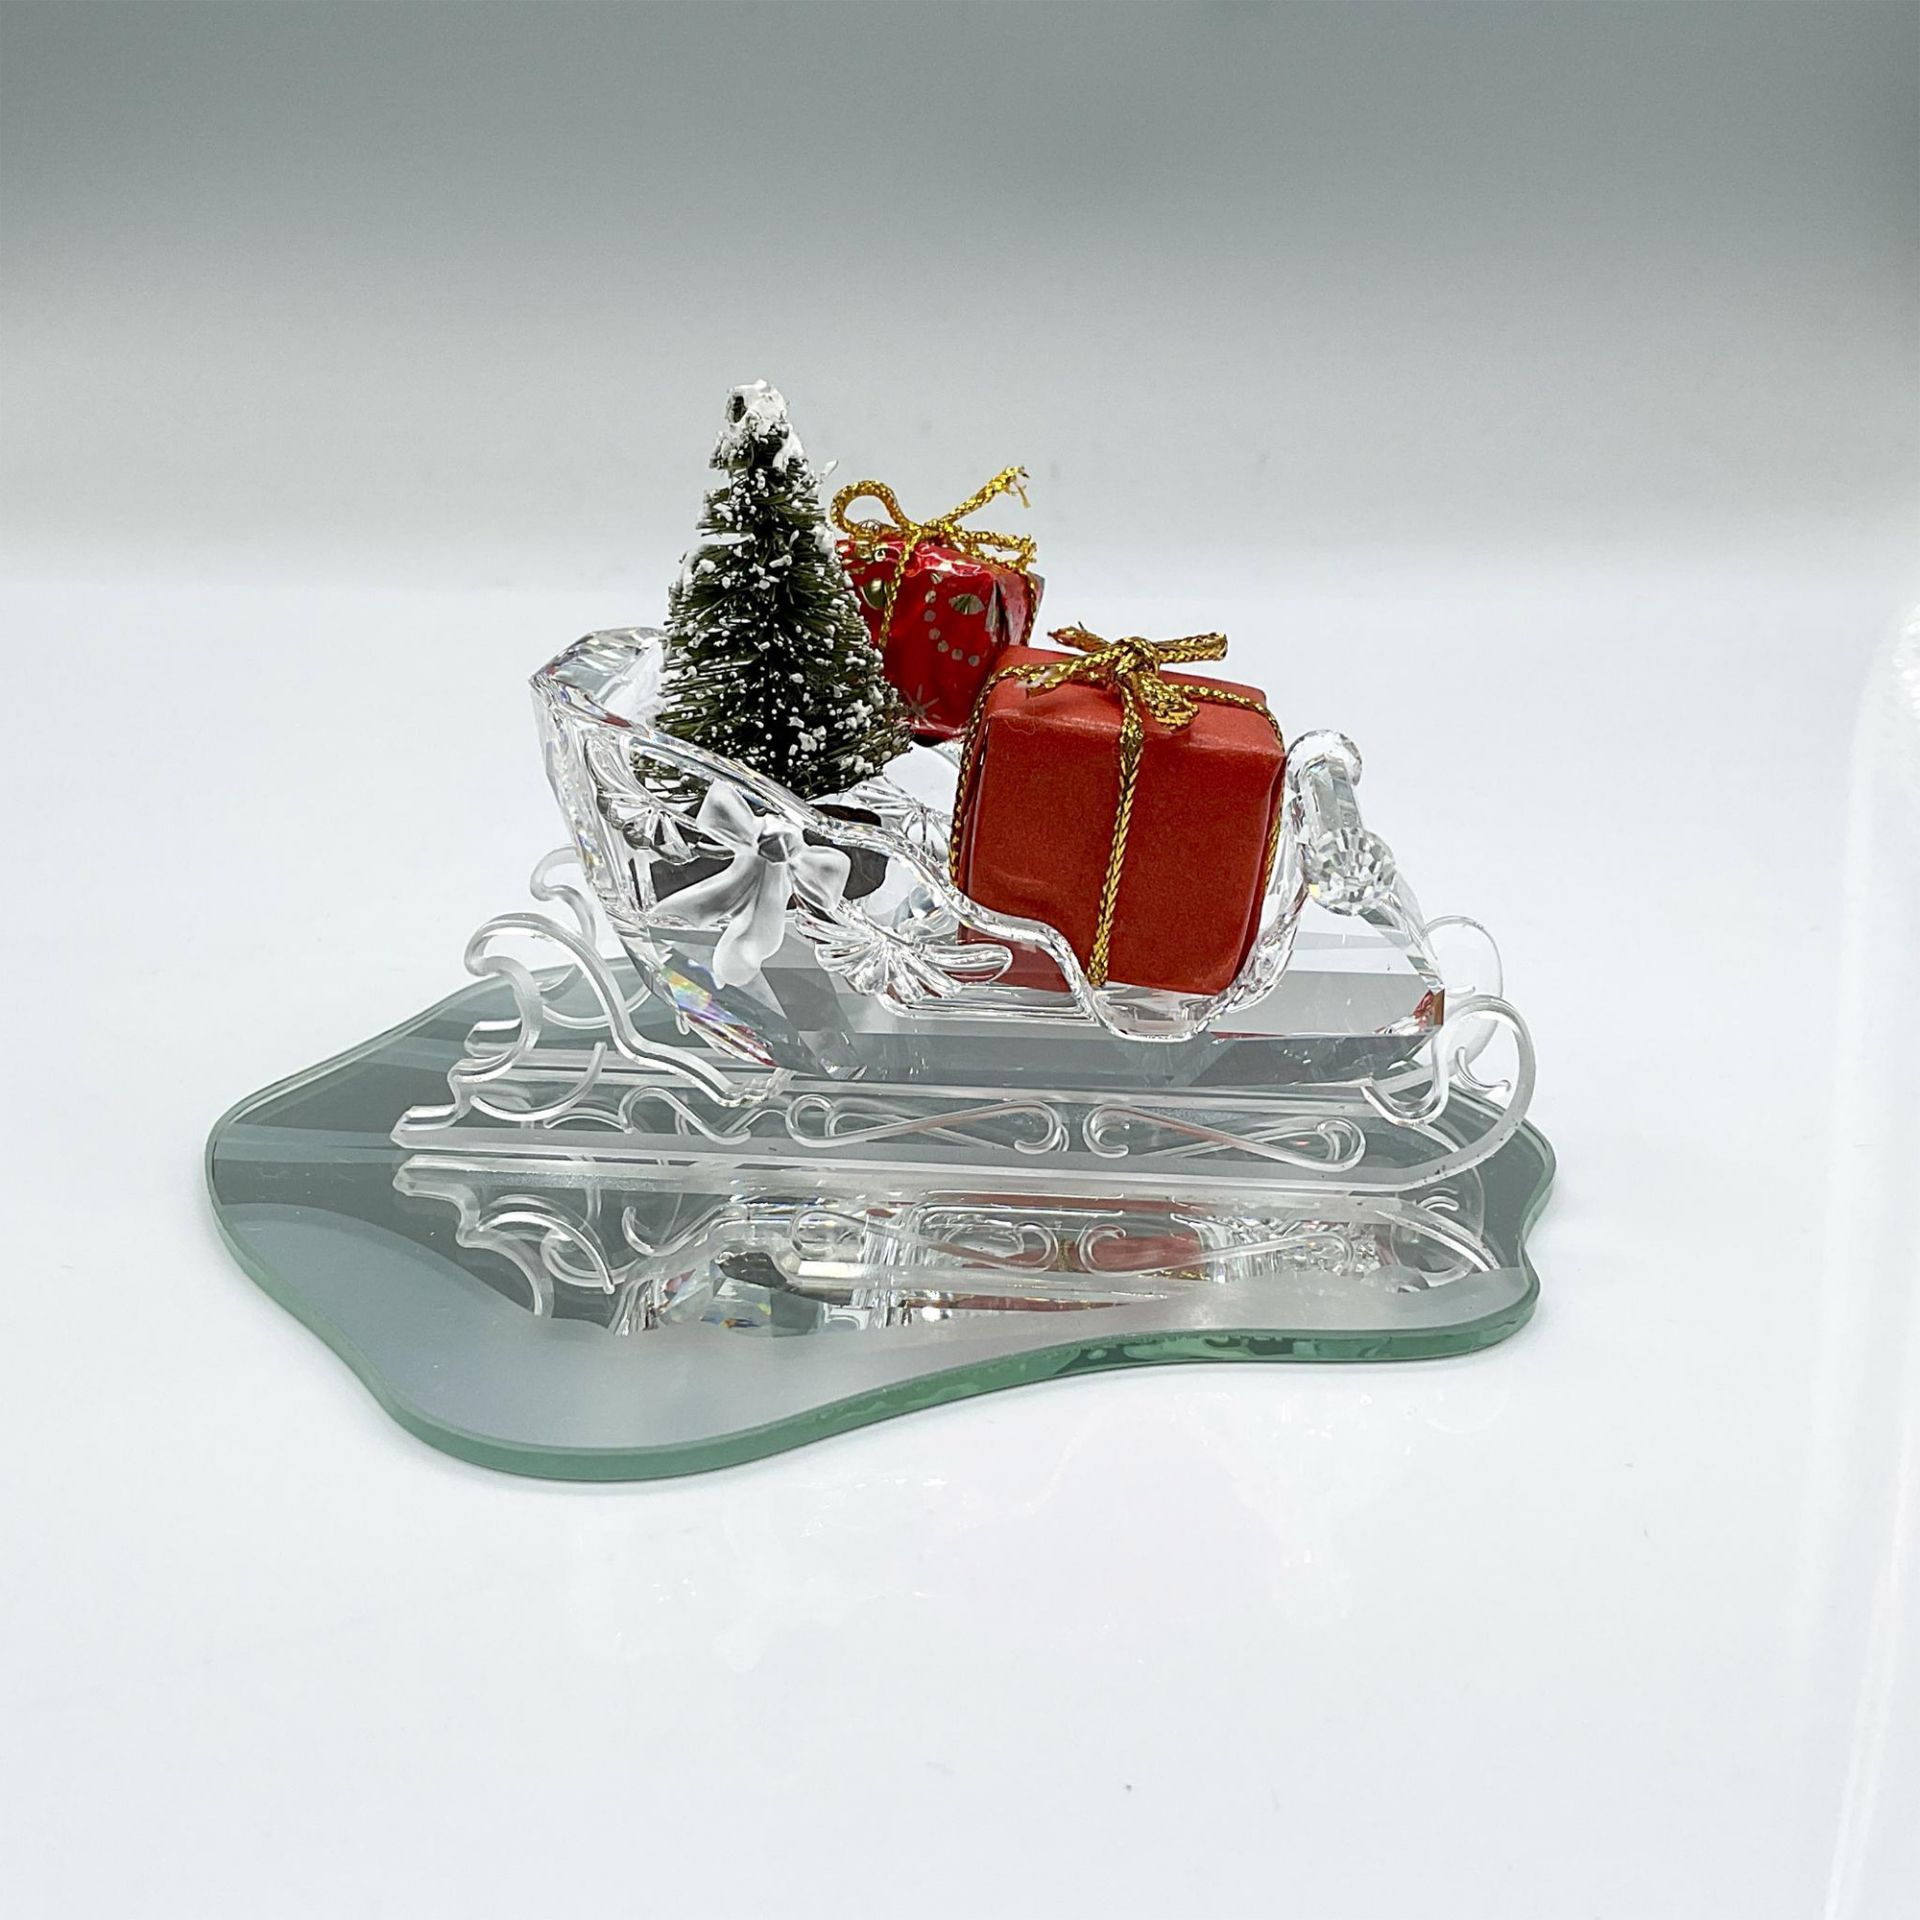 Swarovski Crystal Figurine, Santa's Christmas Sleigh - Image 2 of 6